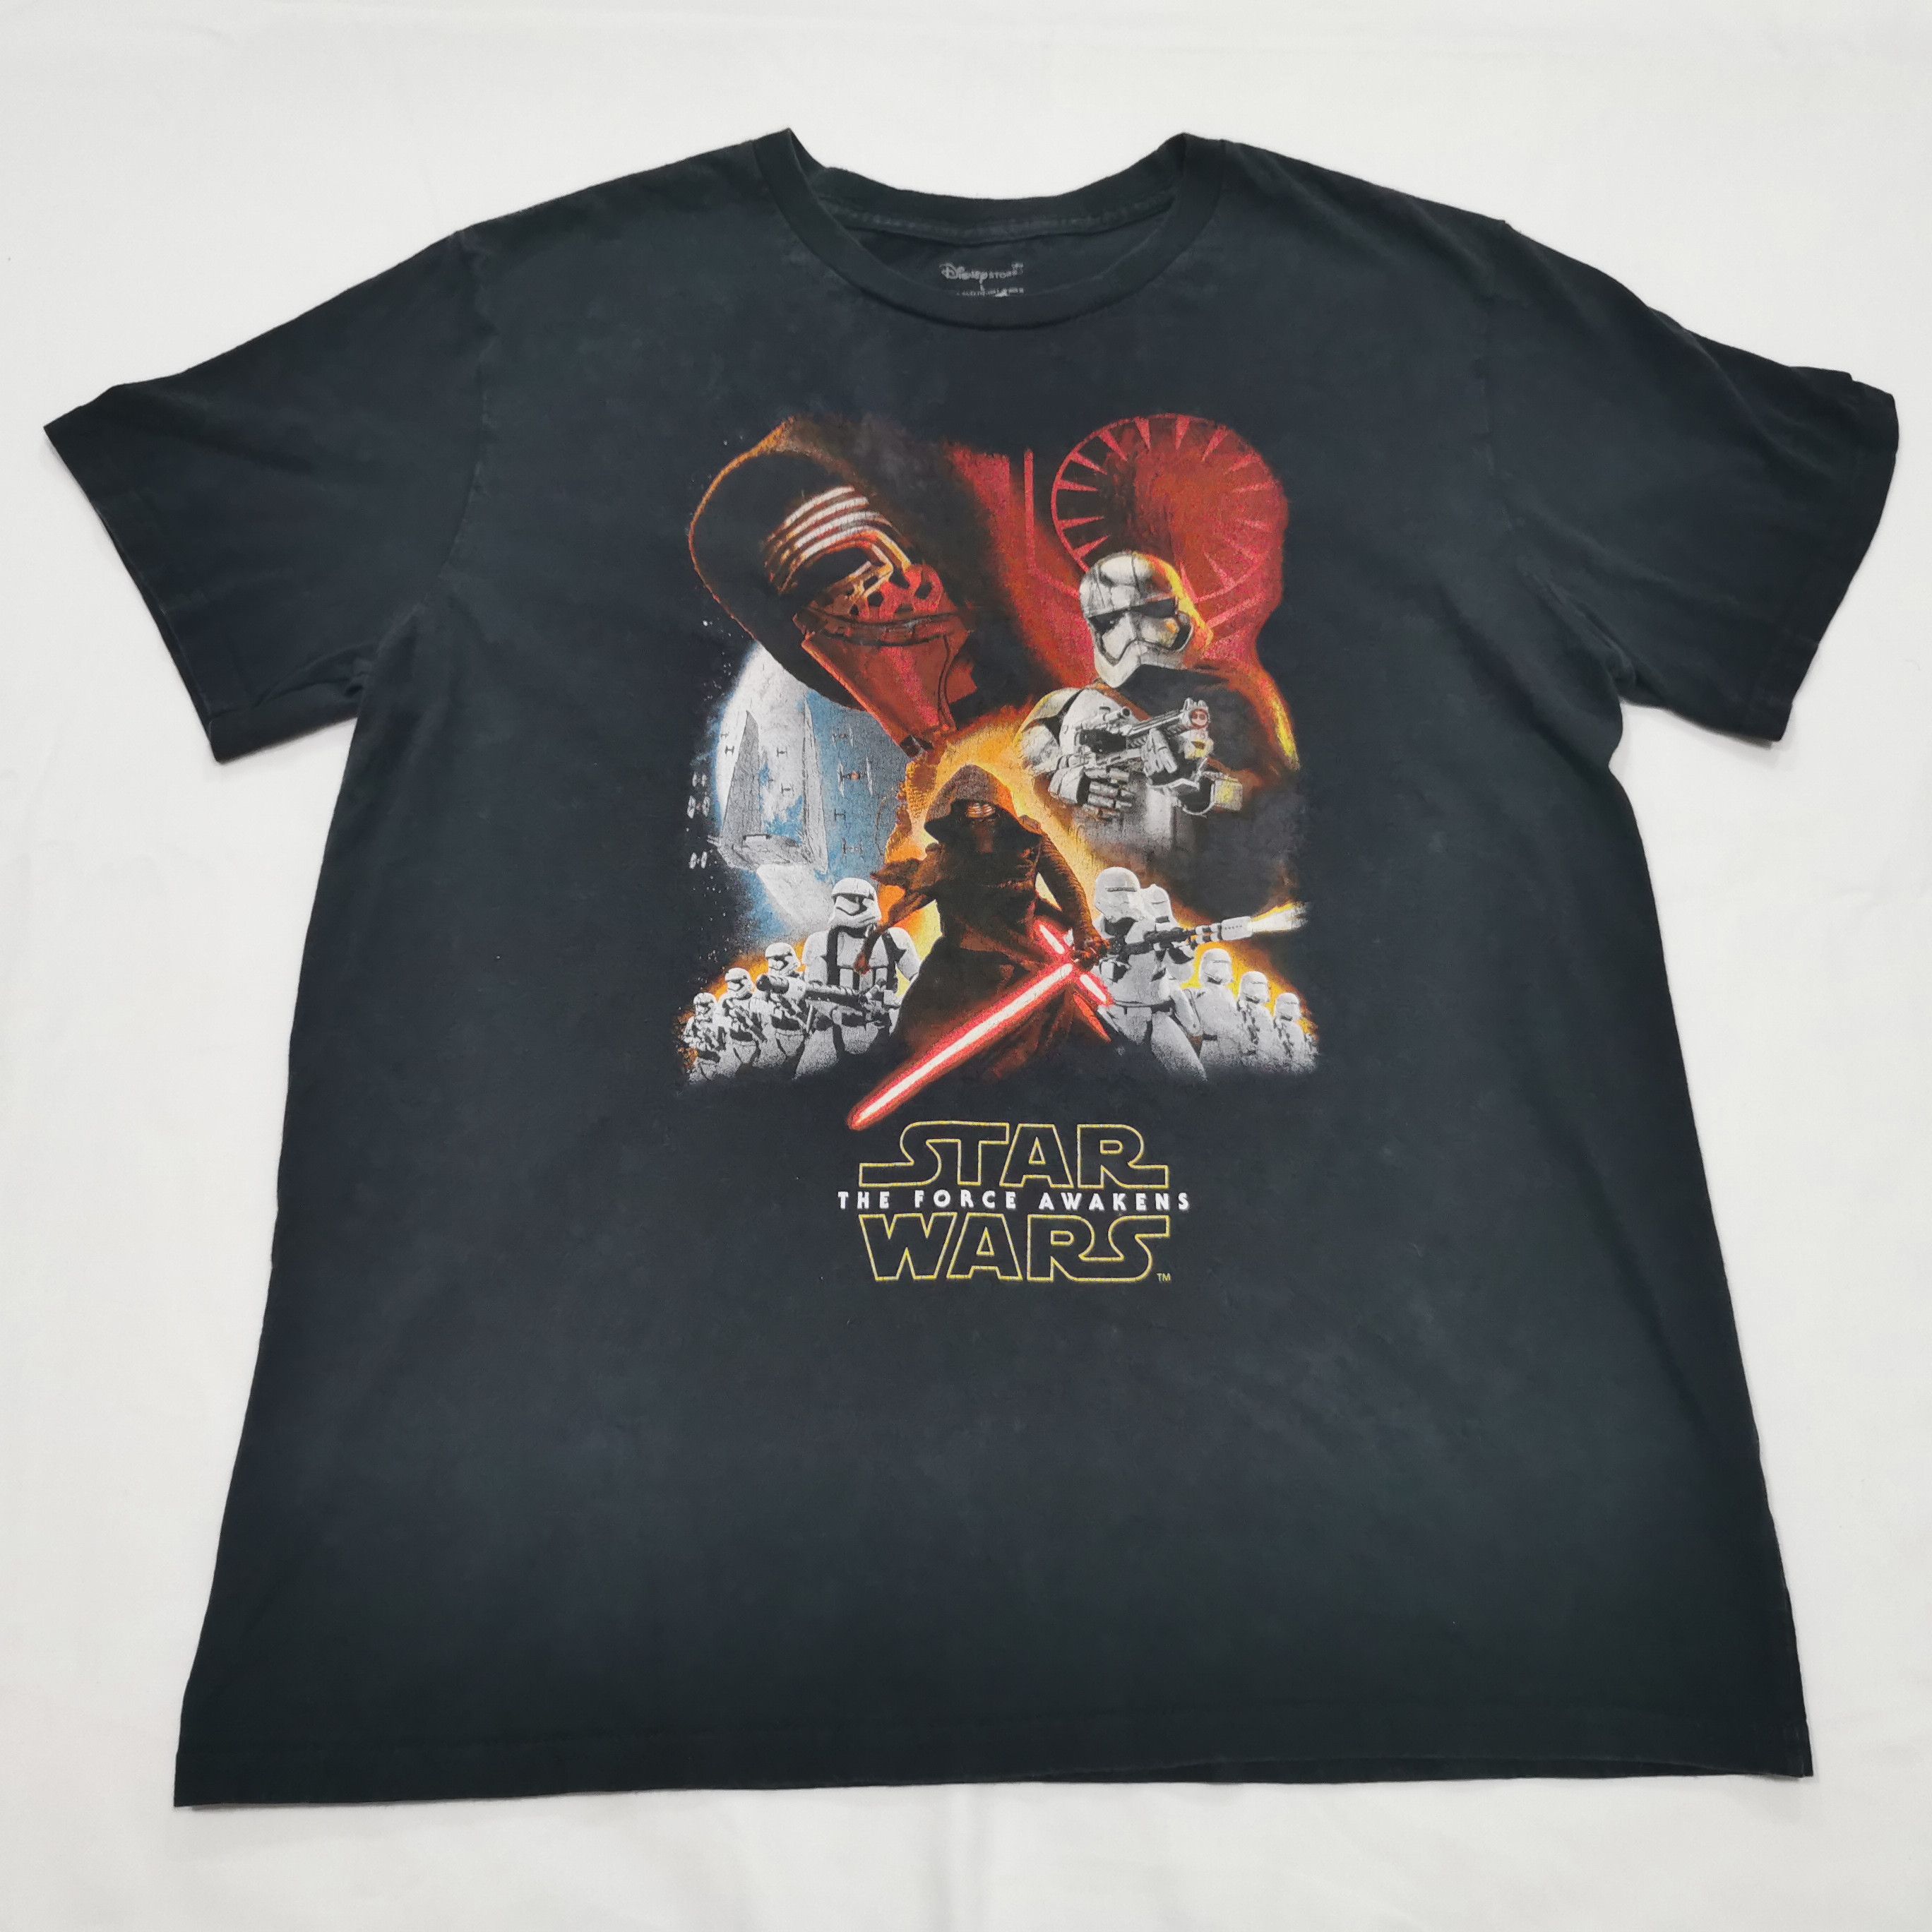 Disney's Movie Star Wars The Force Awekens Tshirt - 1